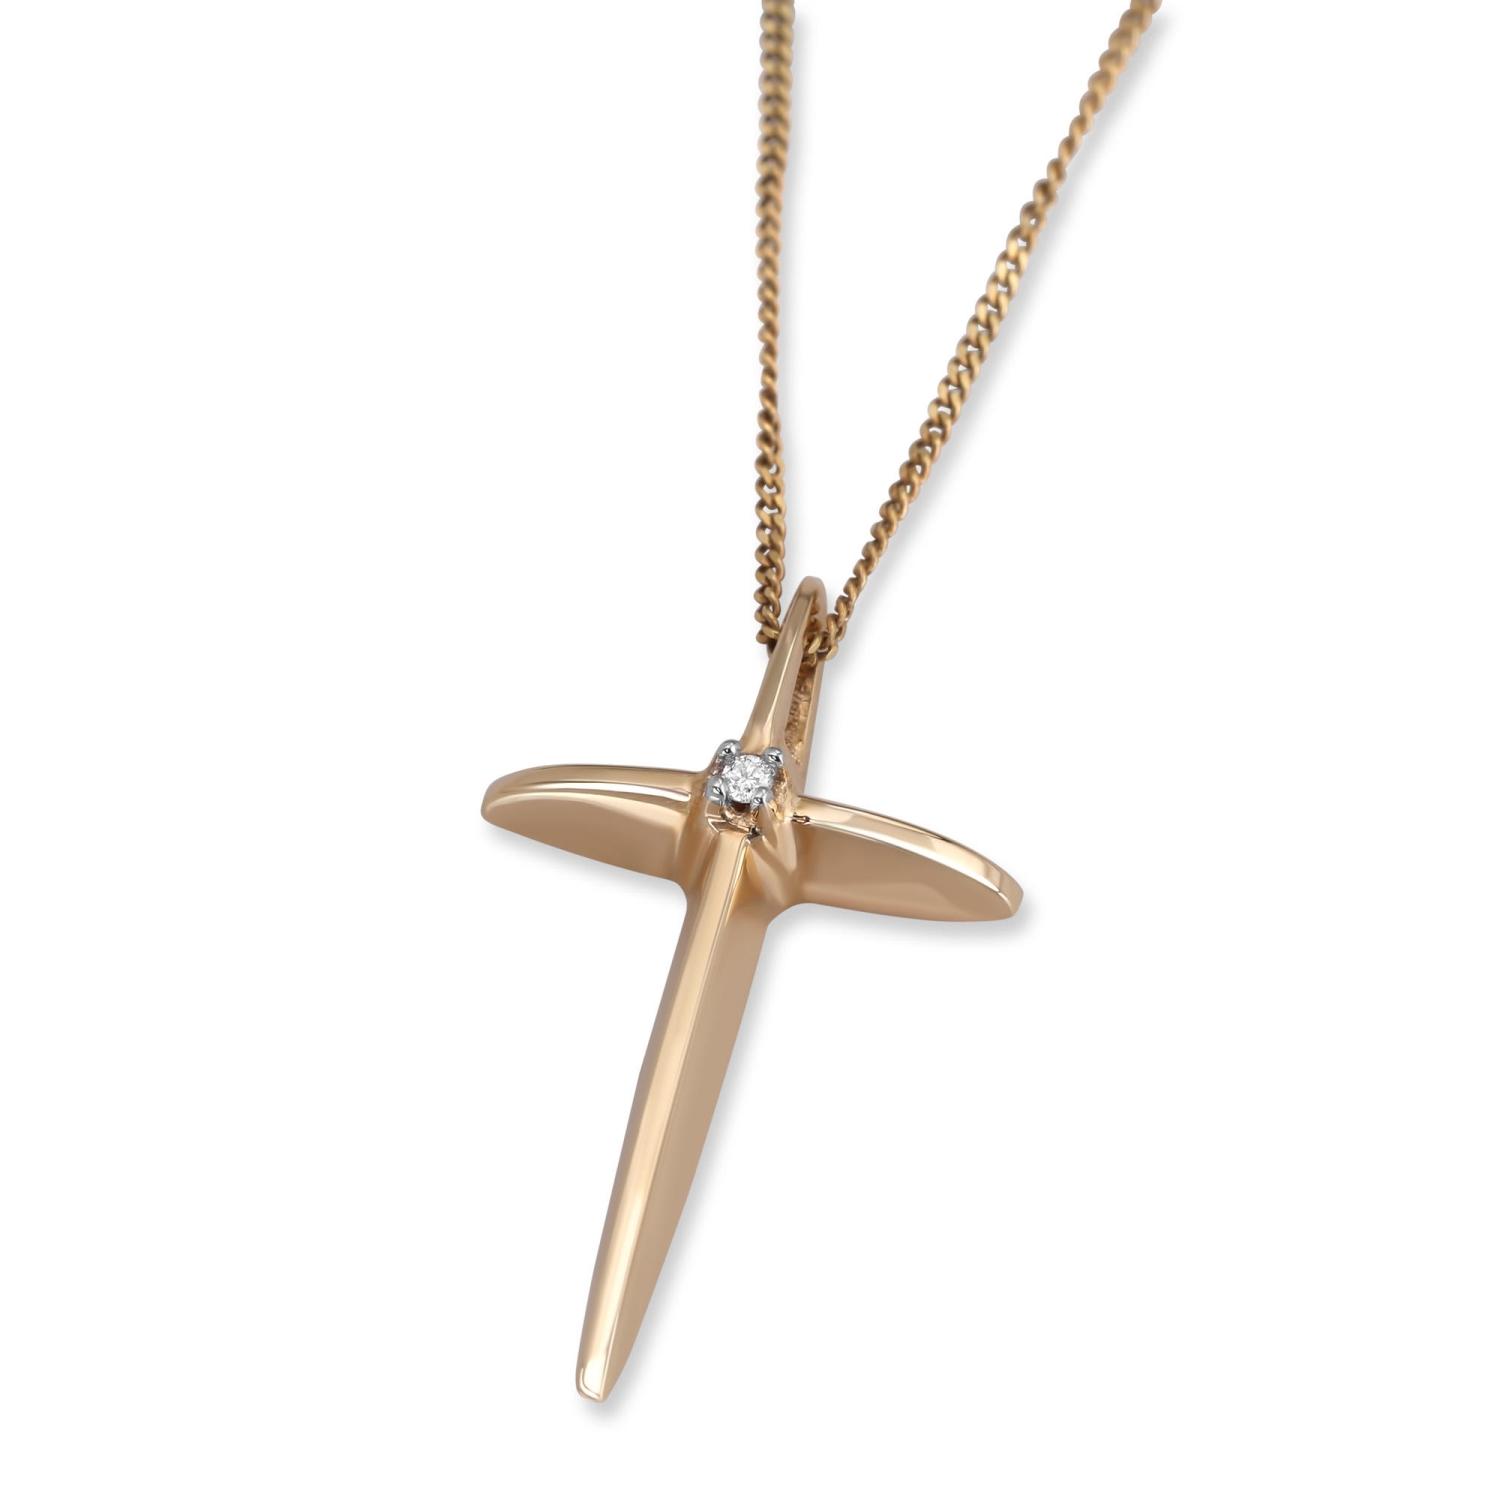 Elegant 14K Gold Cross with Single Diamond Cross Necklace - 1